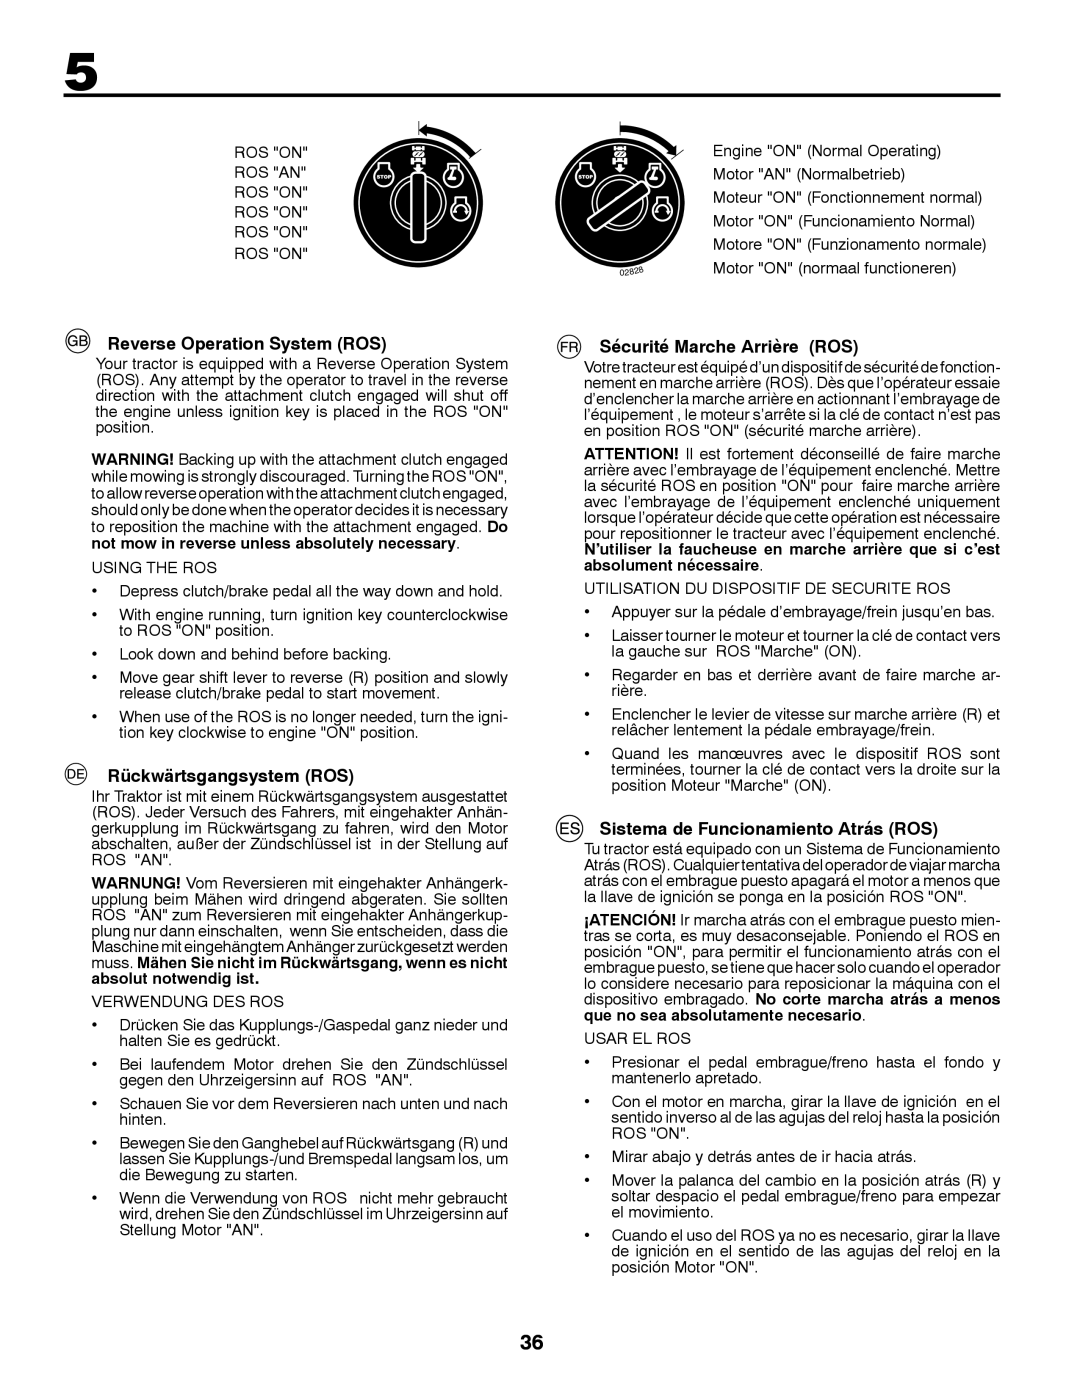 Husqvarna LT126 instruction manual Reverse Operation System ROS, Rückwärtsgangsystem ROS, Sécurité Marche Arrière ROS 